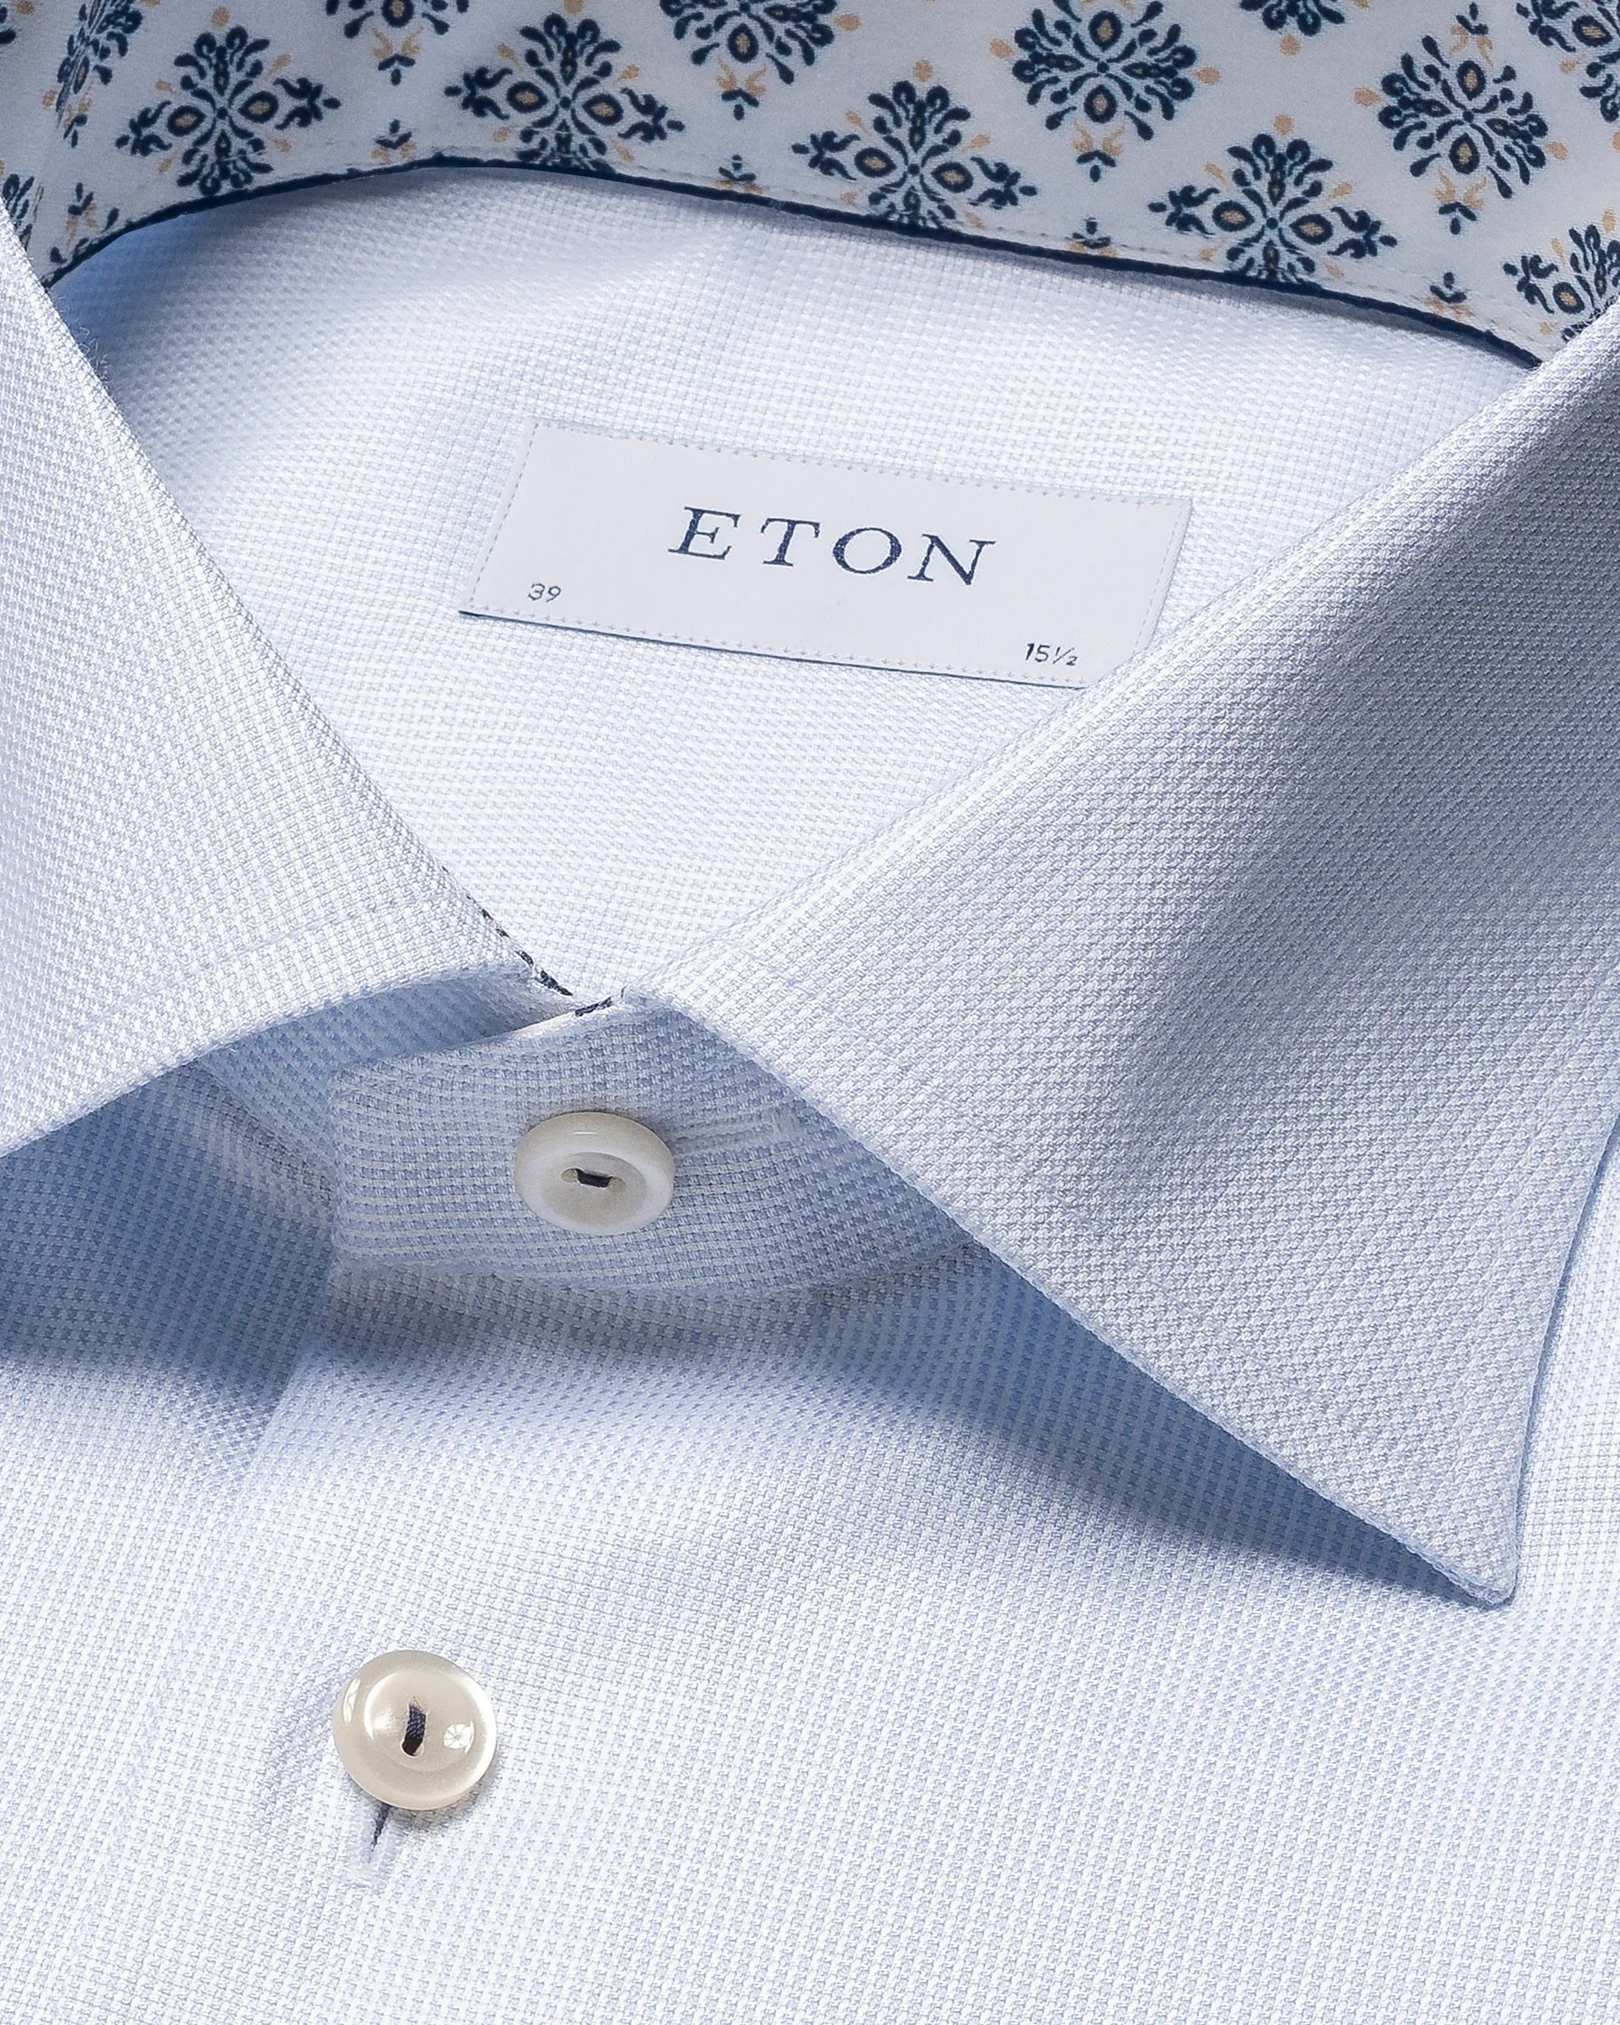 Eton - light blue twill special details